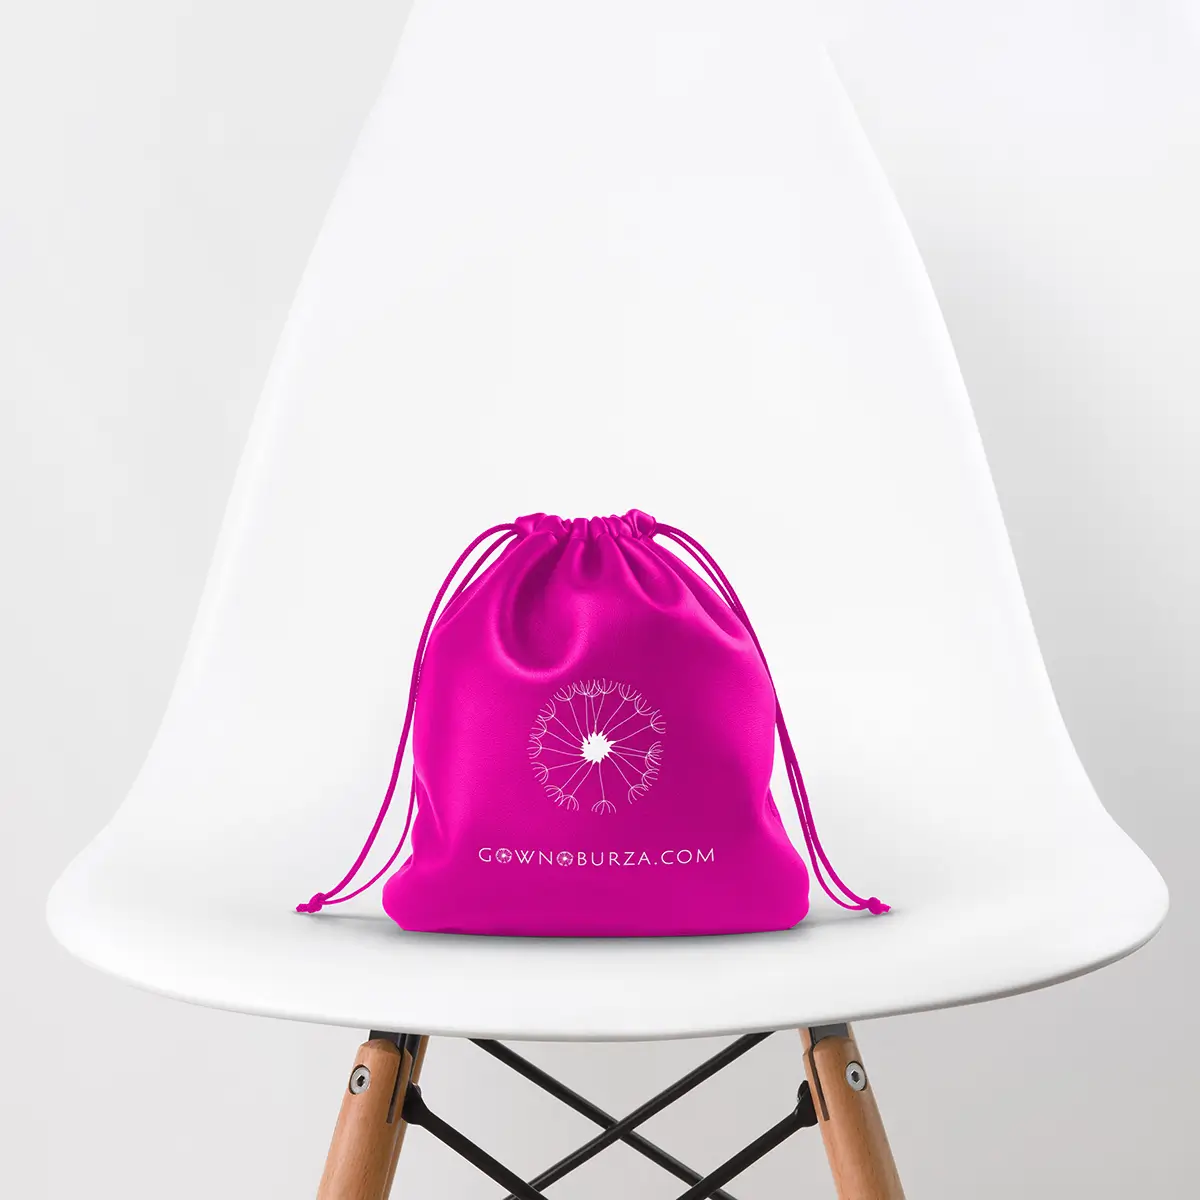 Pink drawstring bag on a white chair